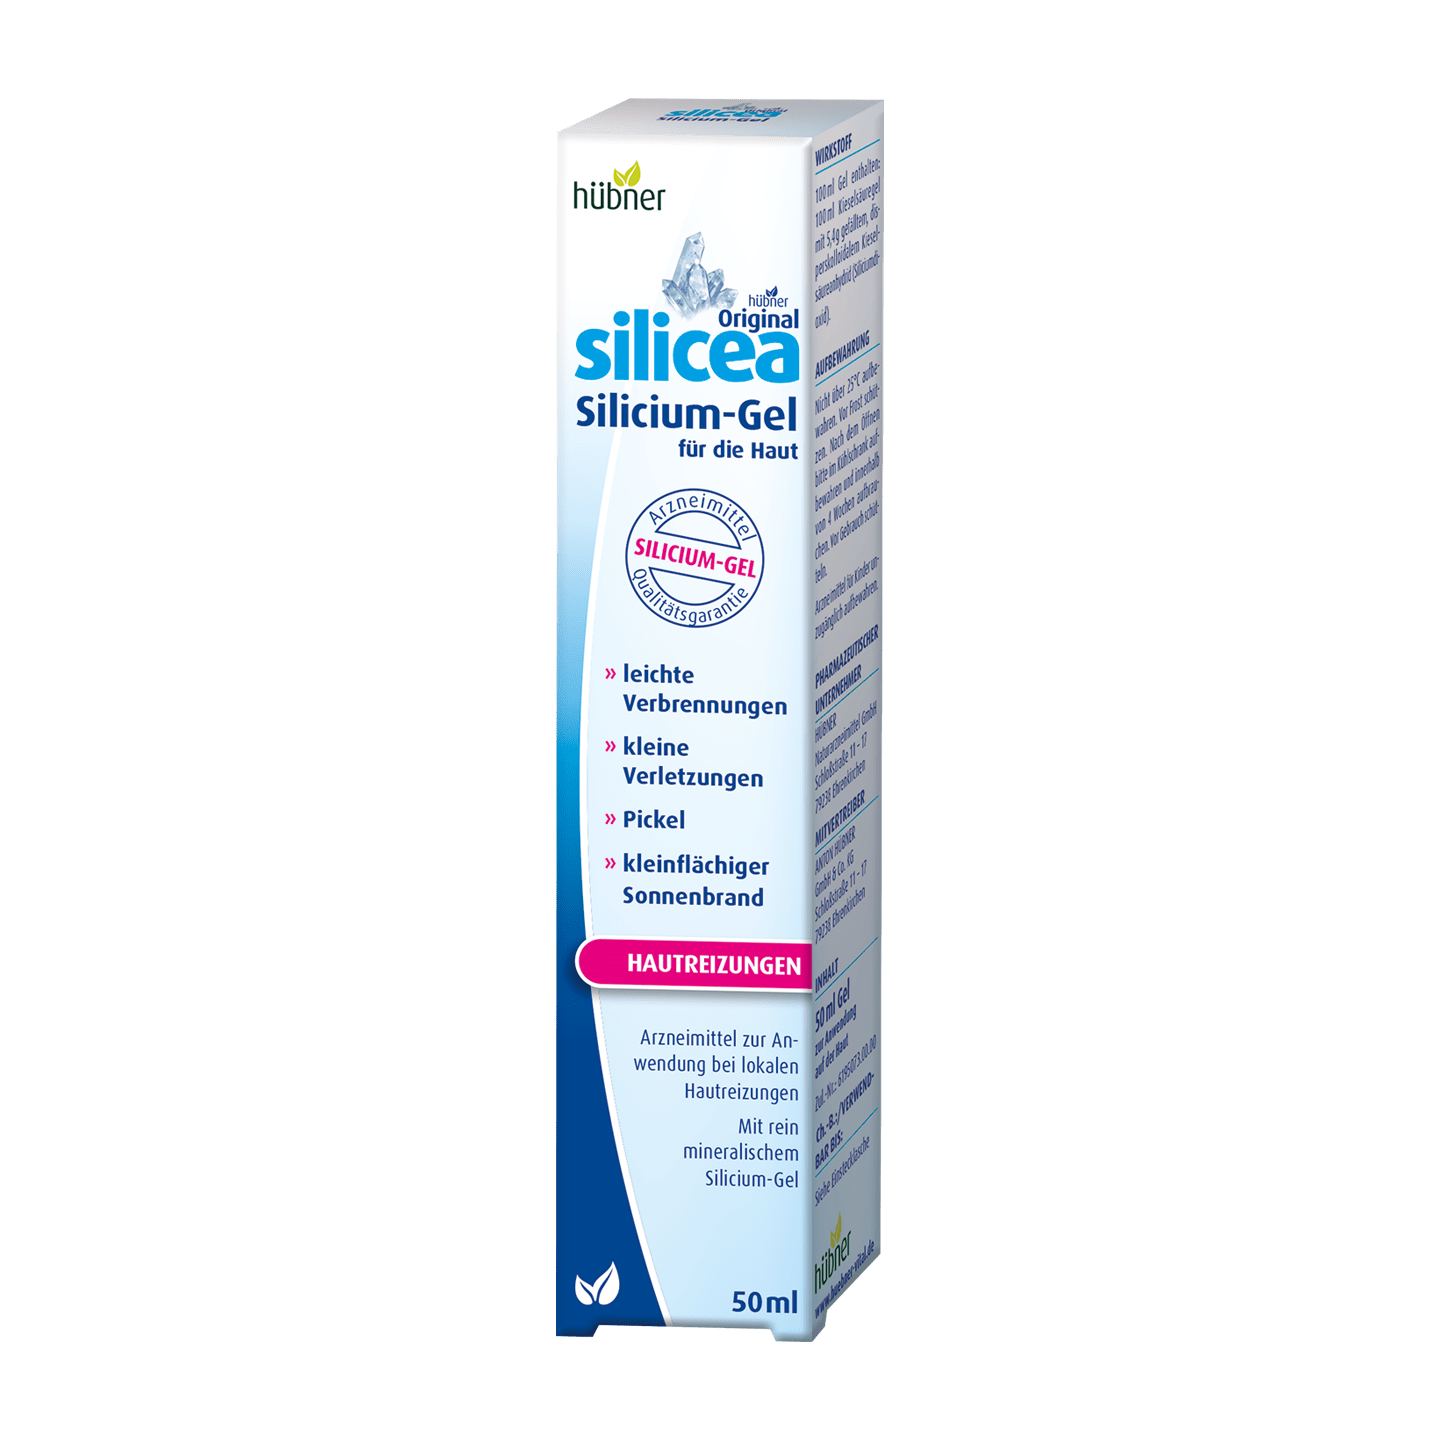 Hübner Original silicea® Silicium-Gel vorne